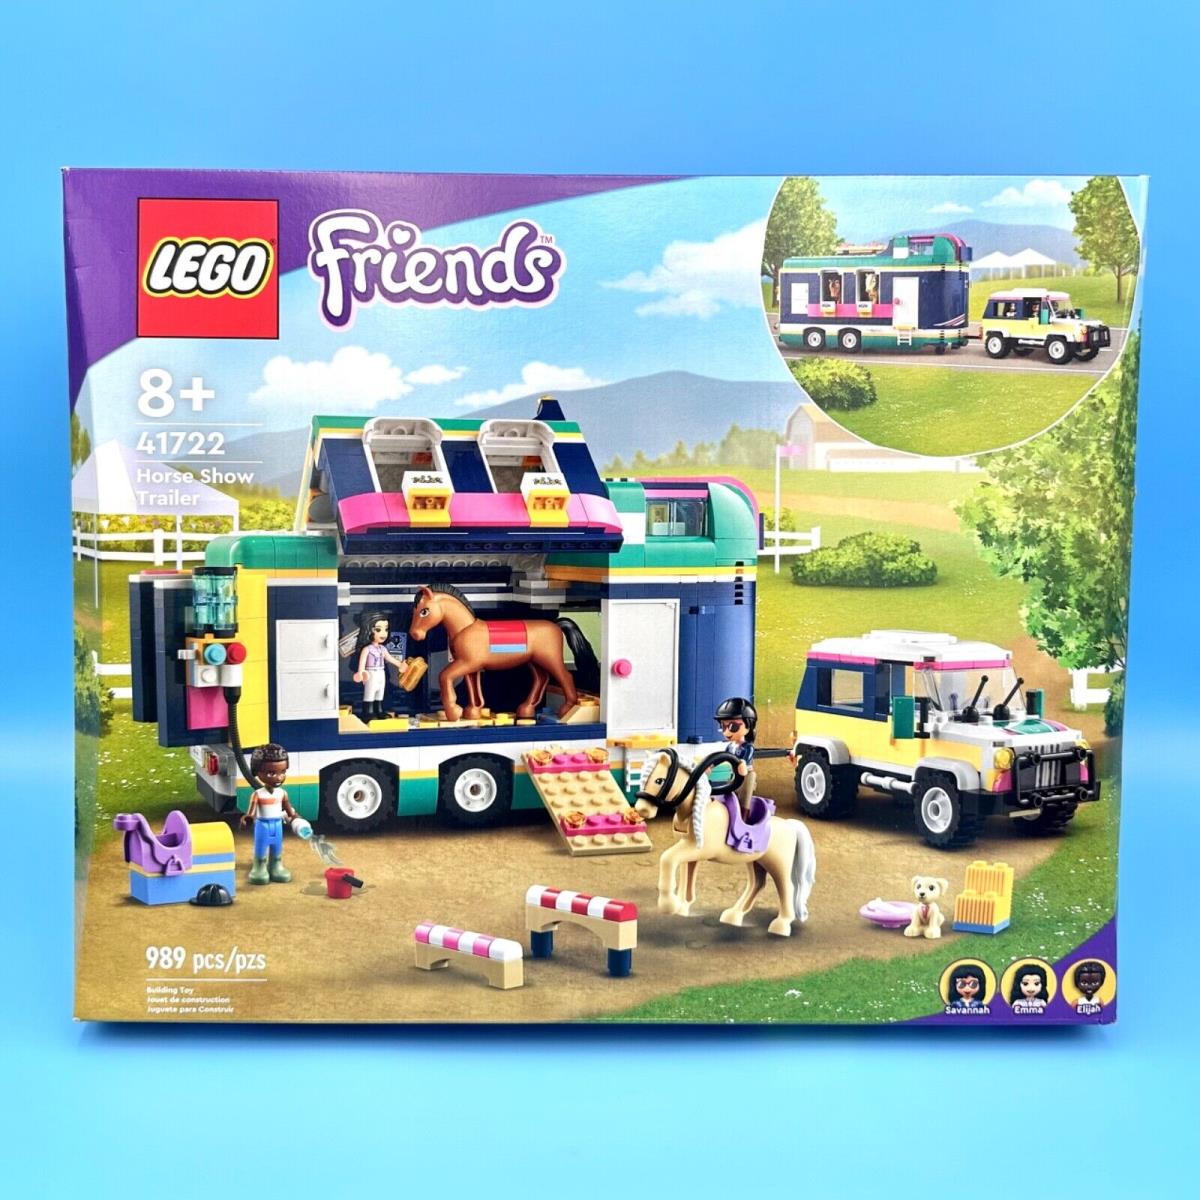 Lego Friends Horse Show Trailer and Suv Tow Car Set 41722 3 Mini-dolls Figures